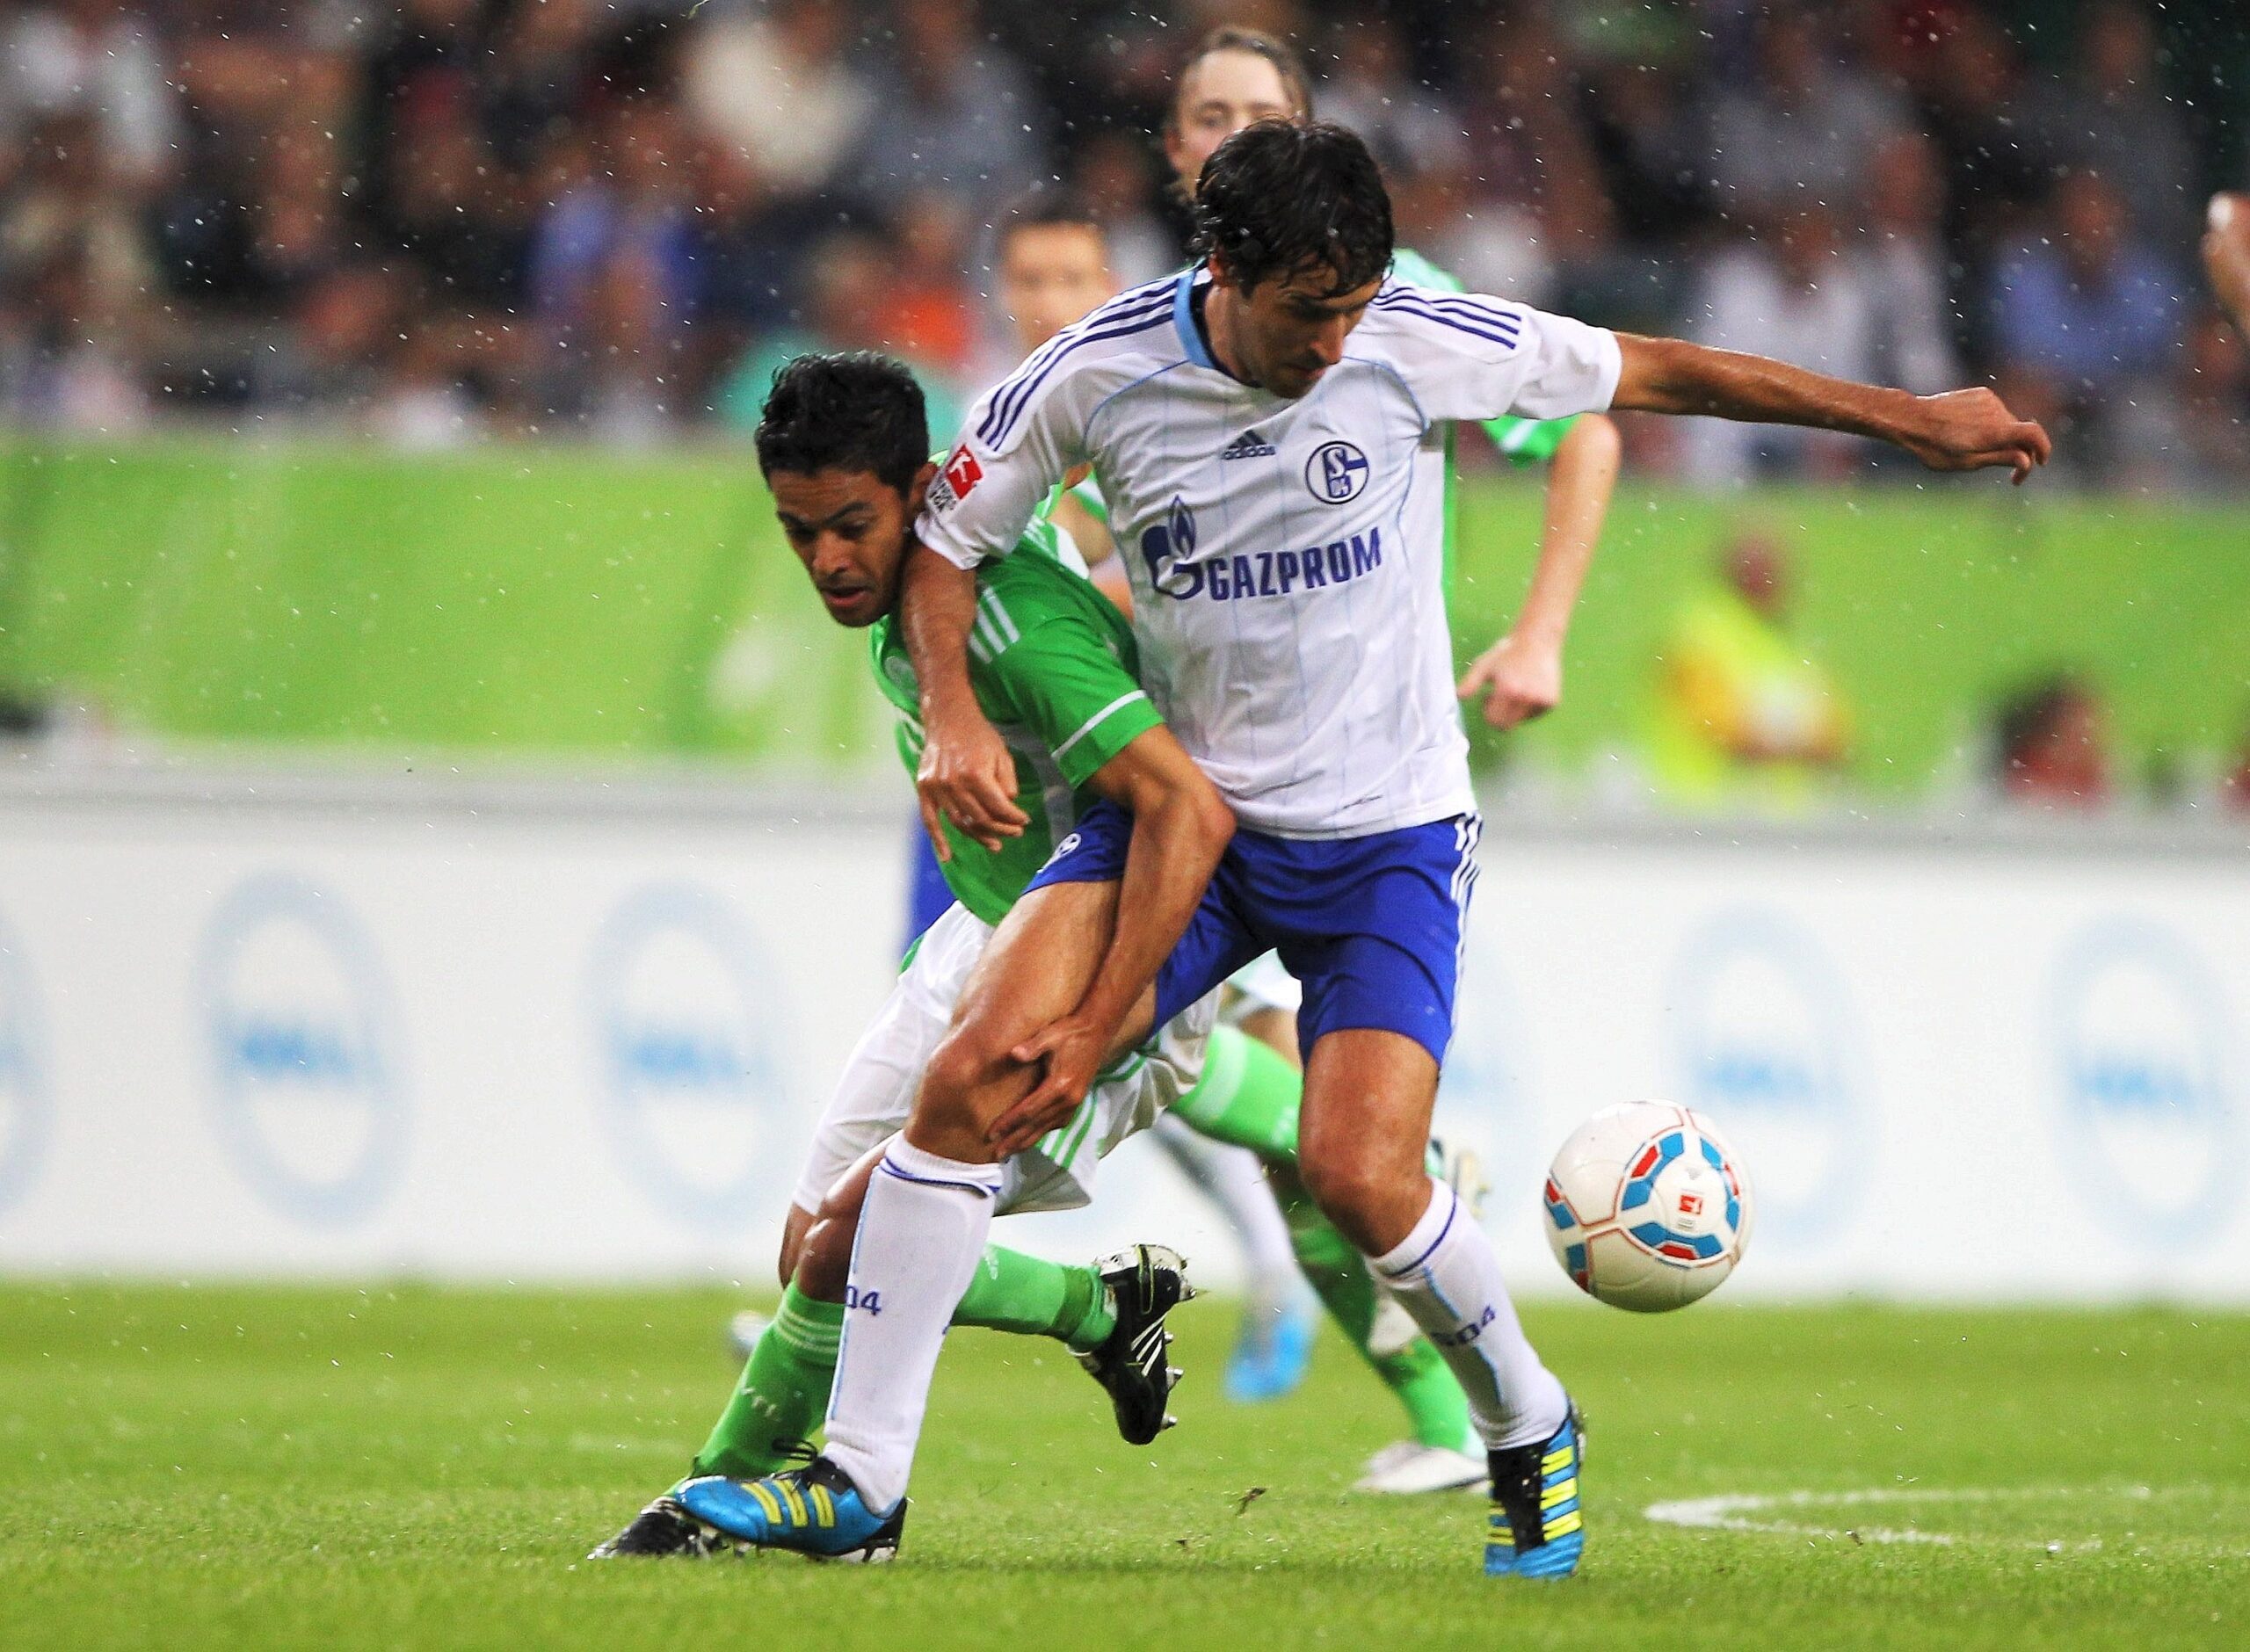 VfL Wolfsburg gegen Schalke 04, Endstand 2:1. Raúl gegen Josué.